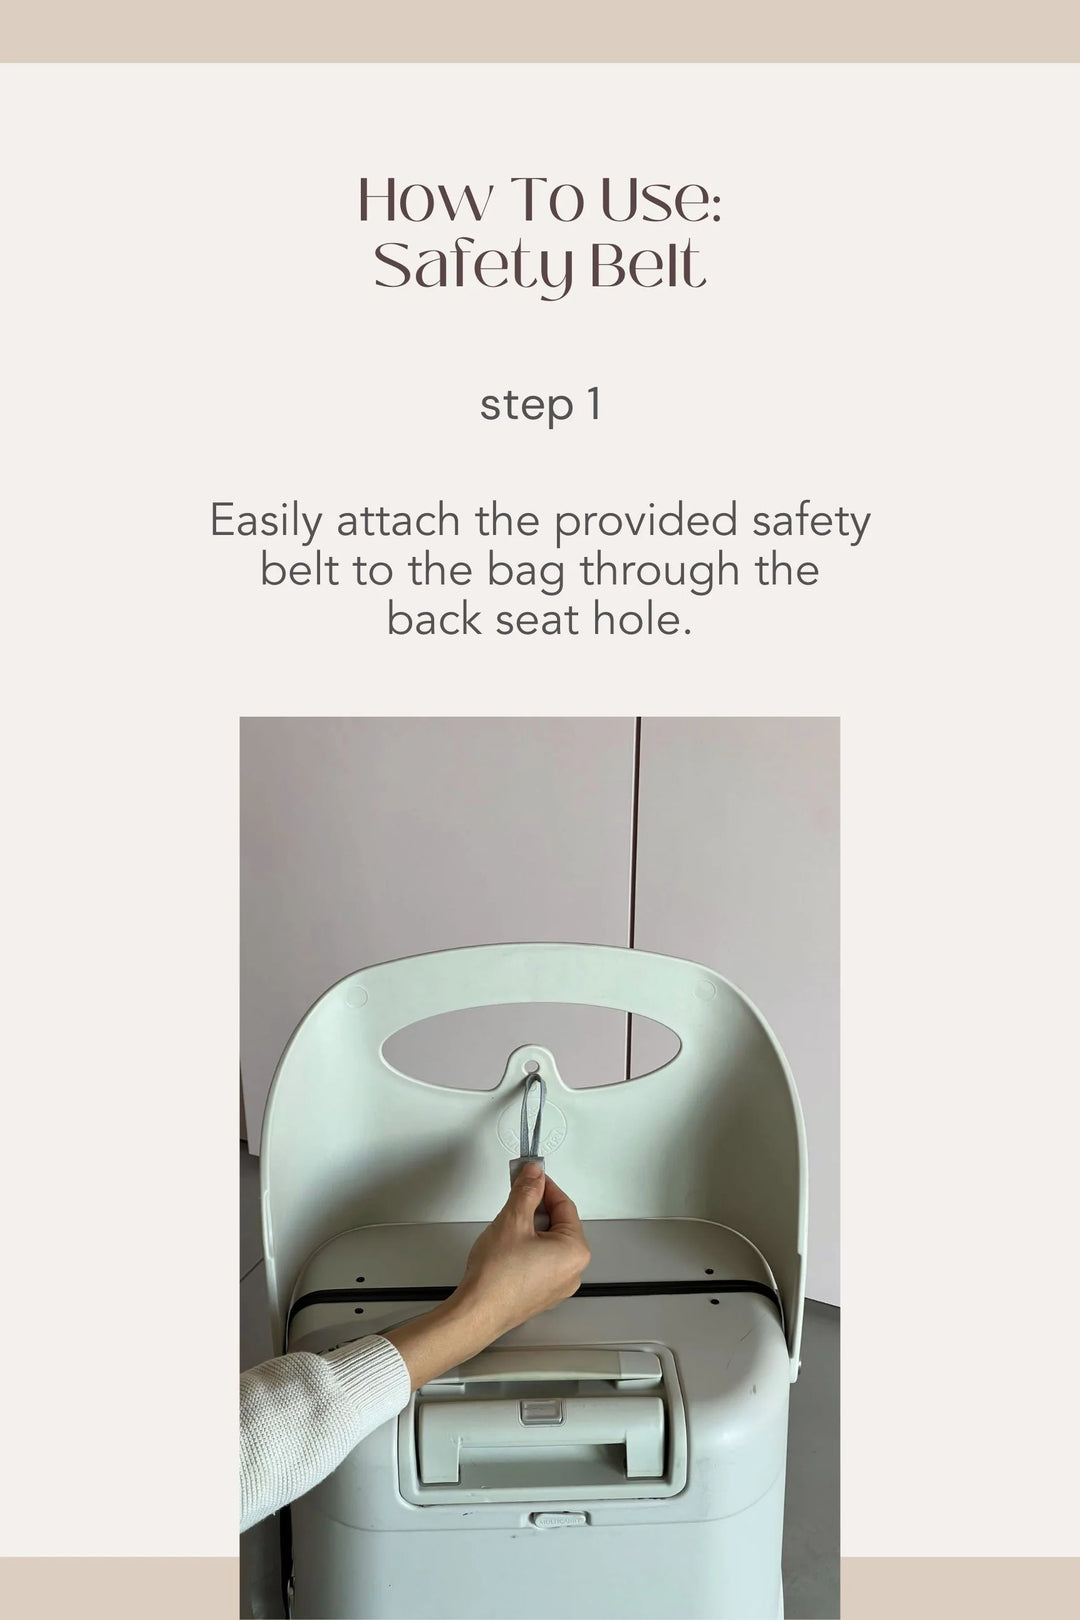 miamily luggage instructions on safety belt